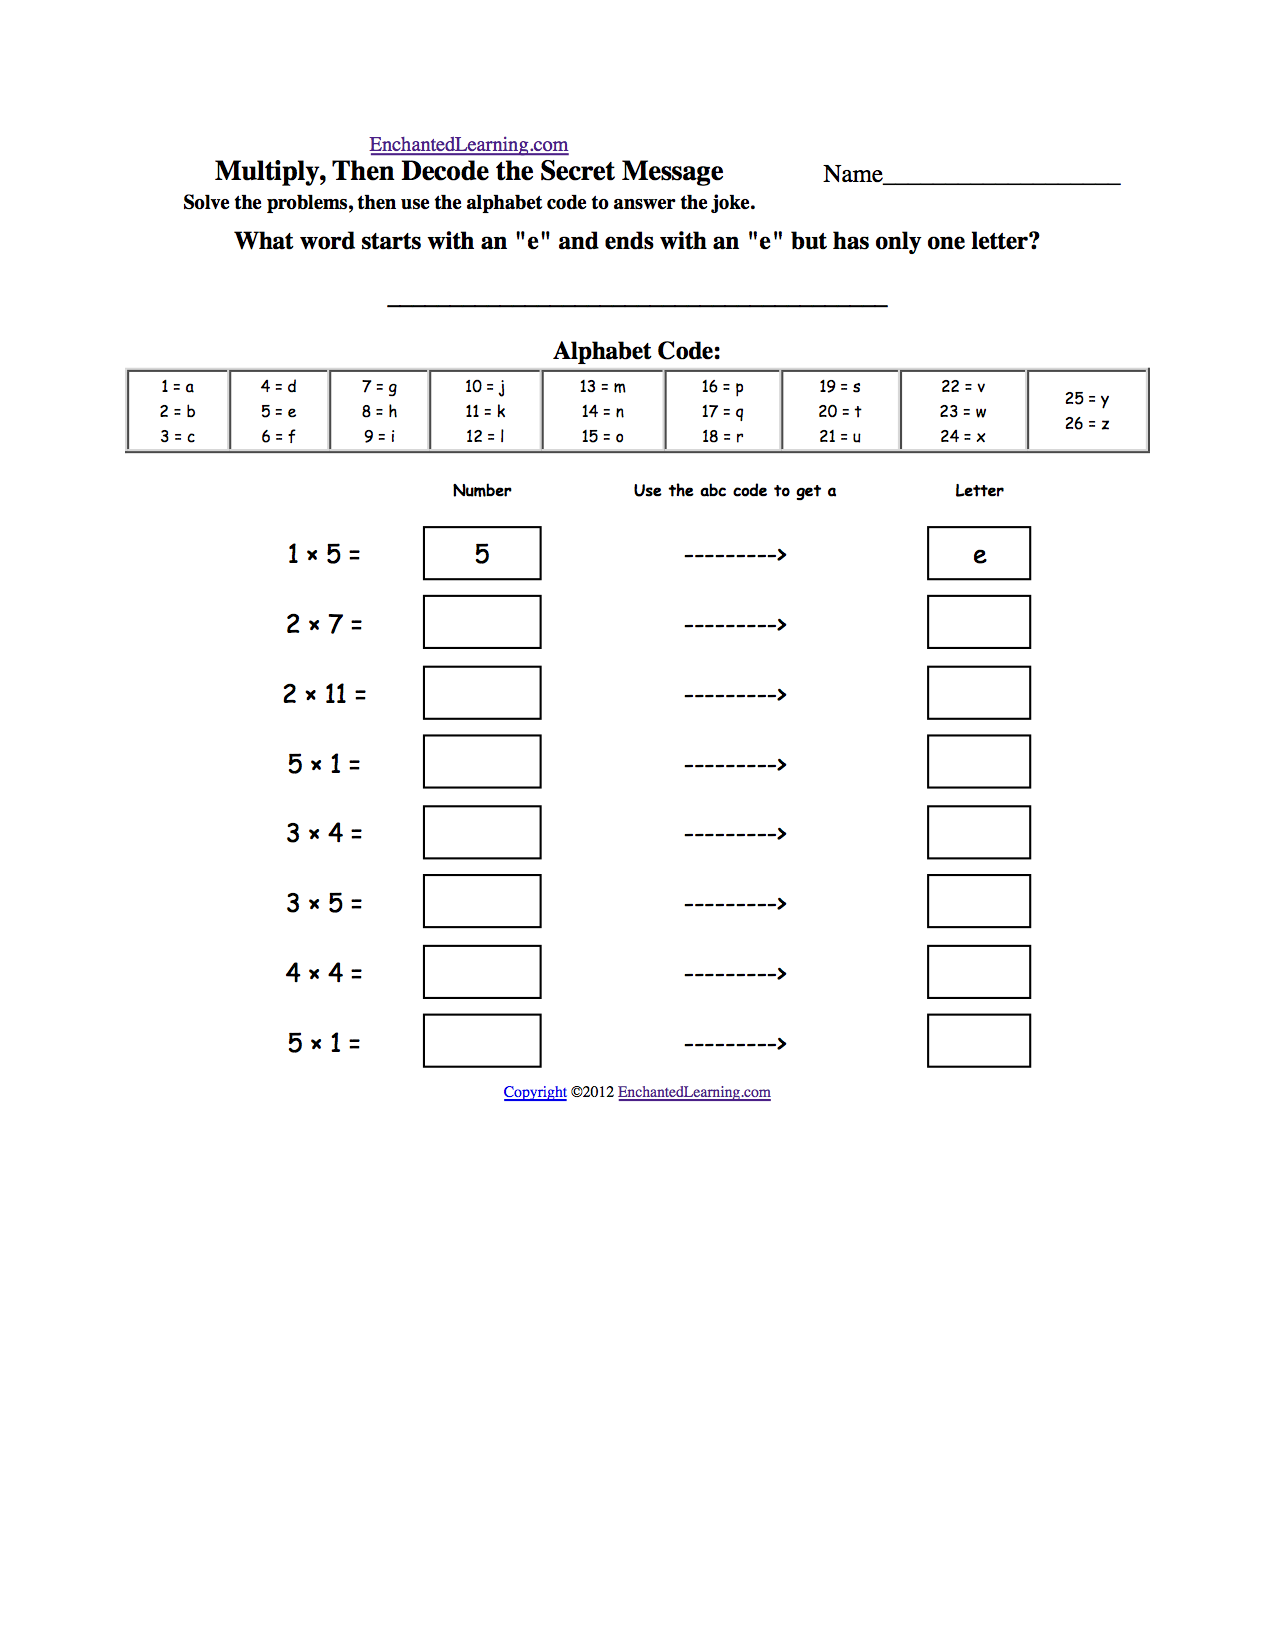 solve-then-decode-multiplication-worksheets-enchantedlearning